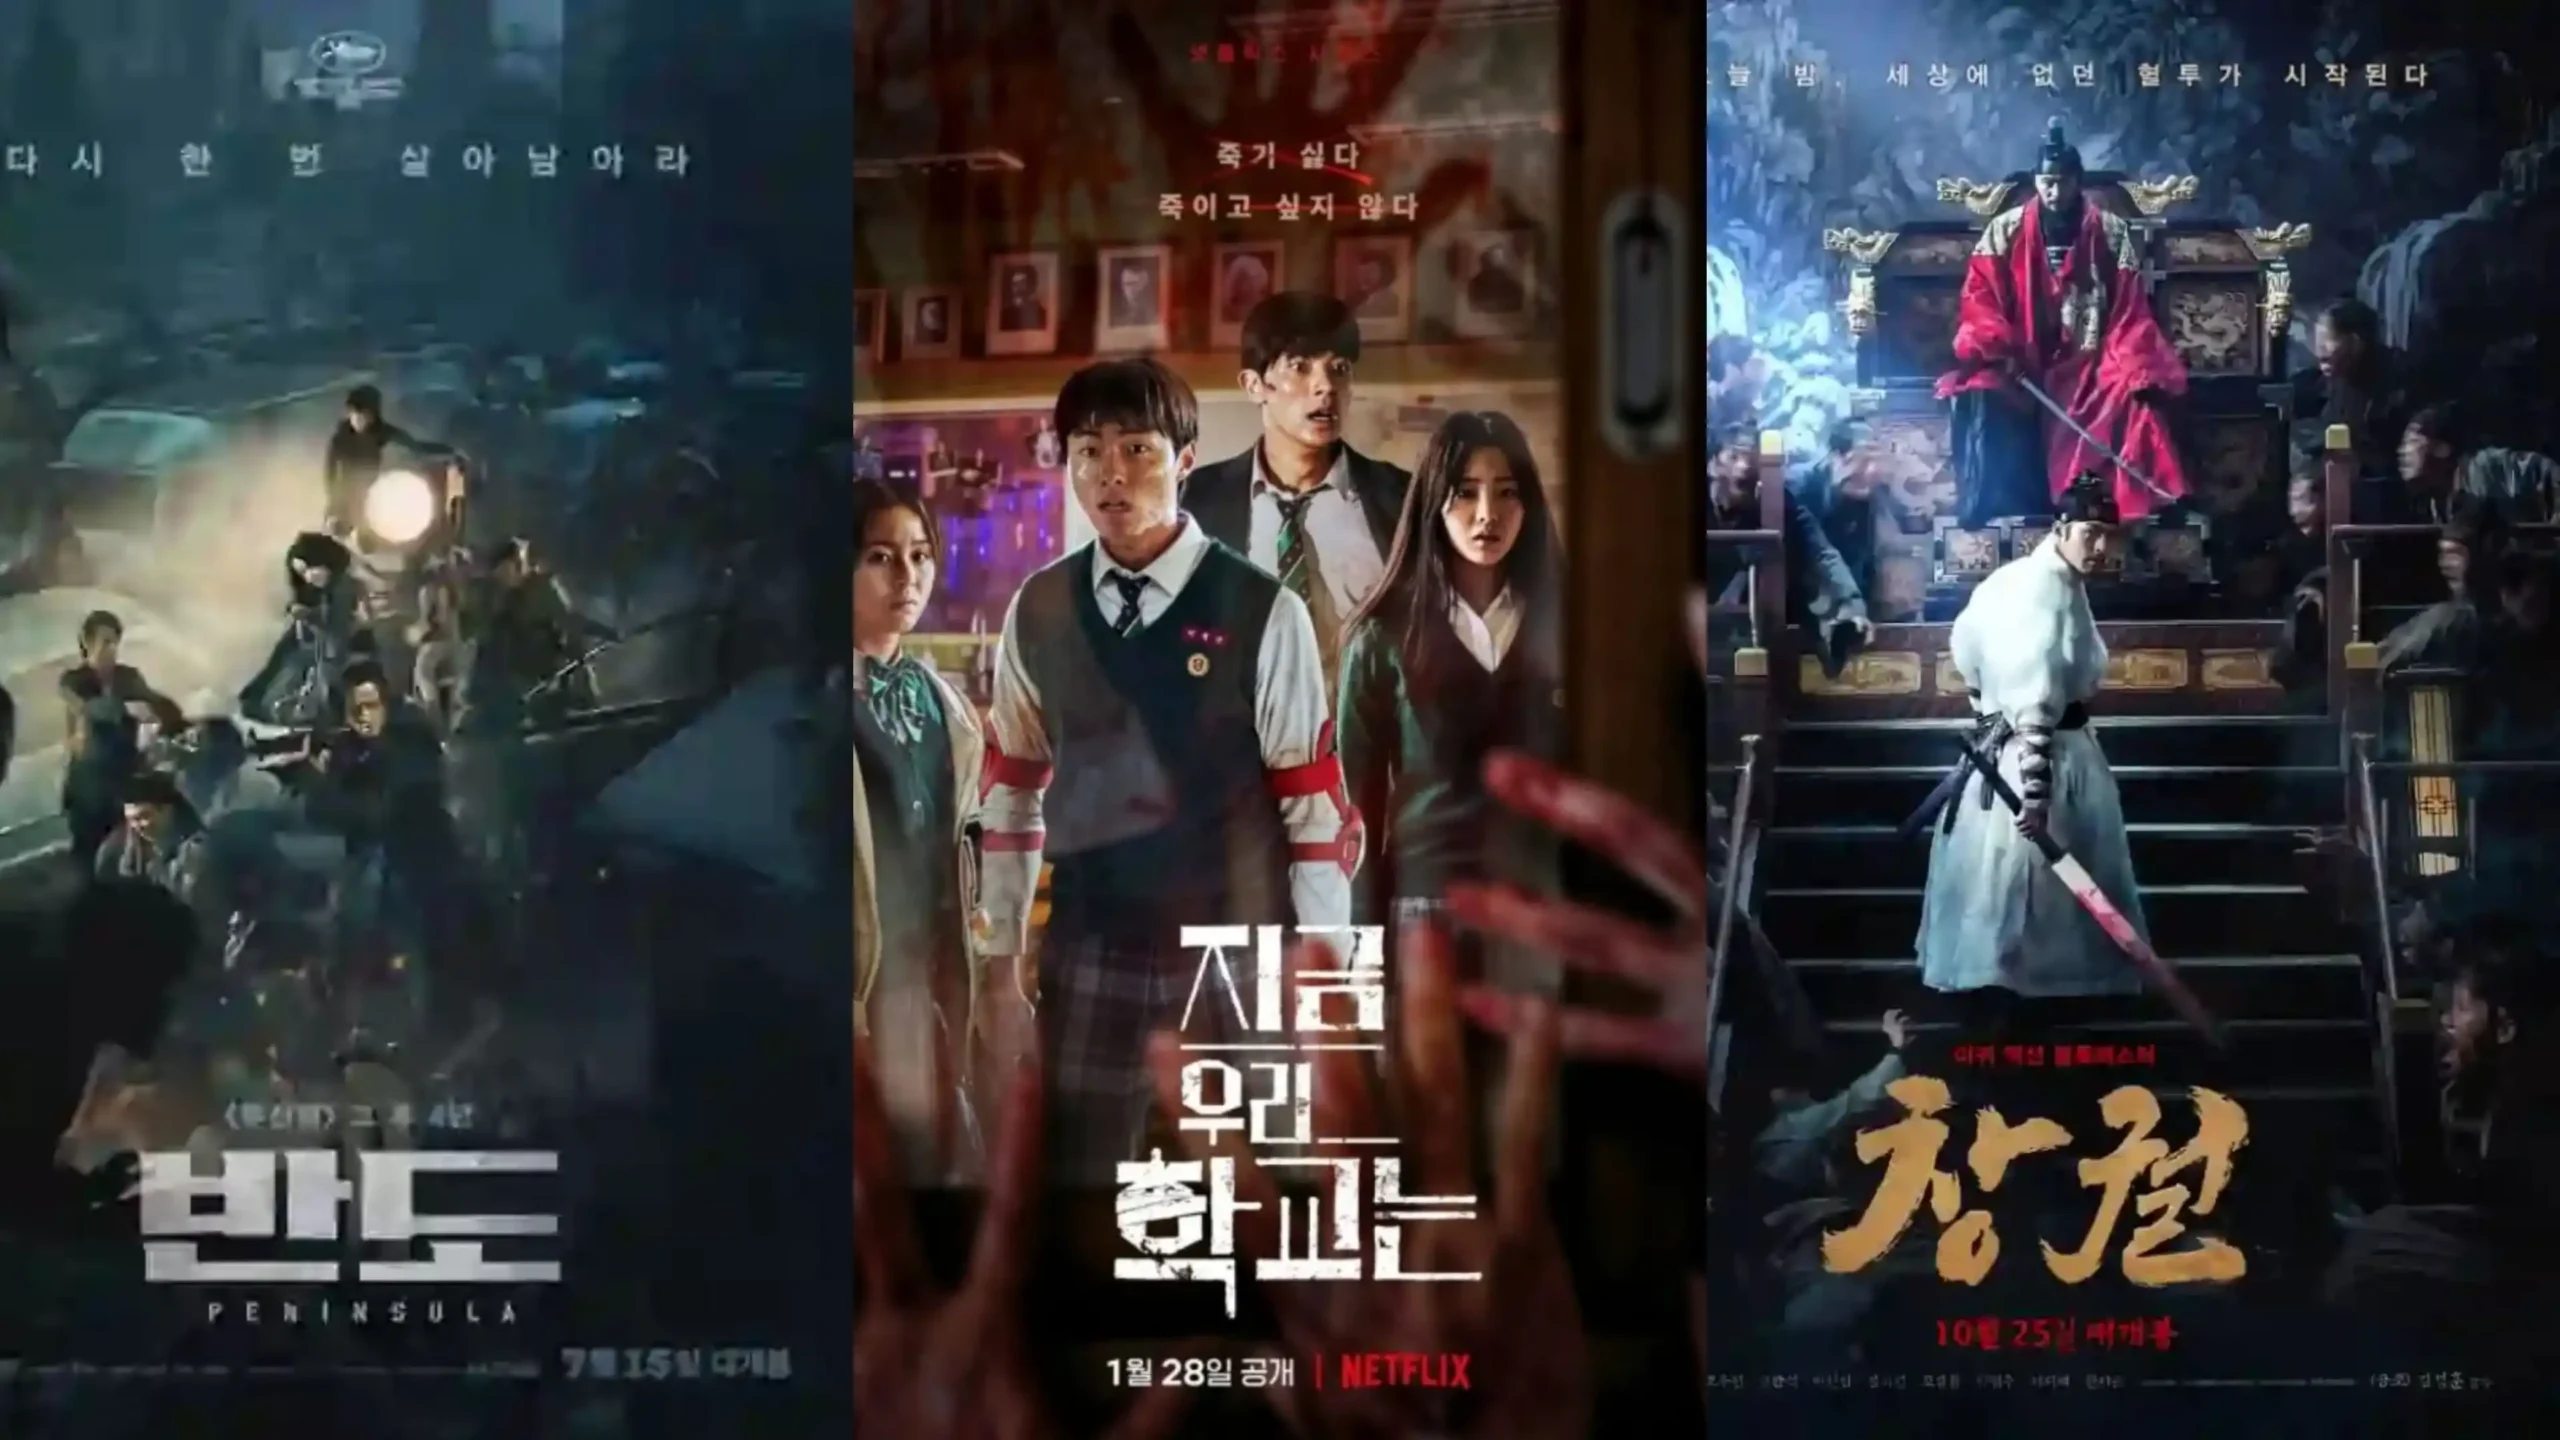 Zombie Korean movies and Korean dramas scaled